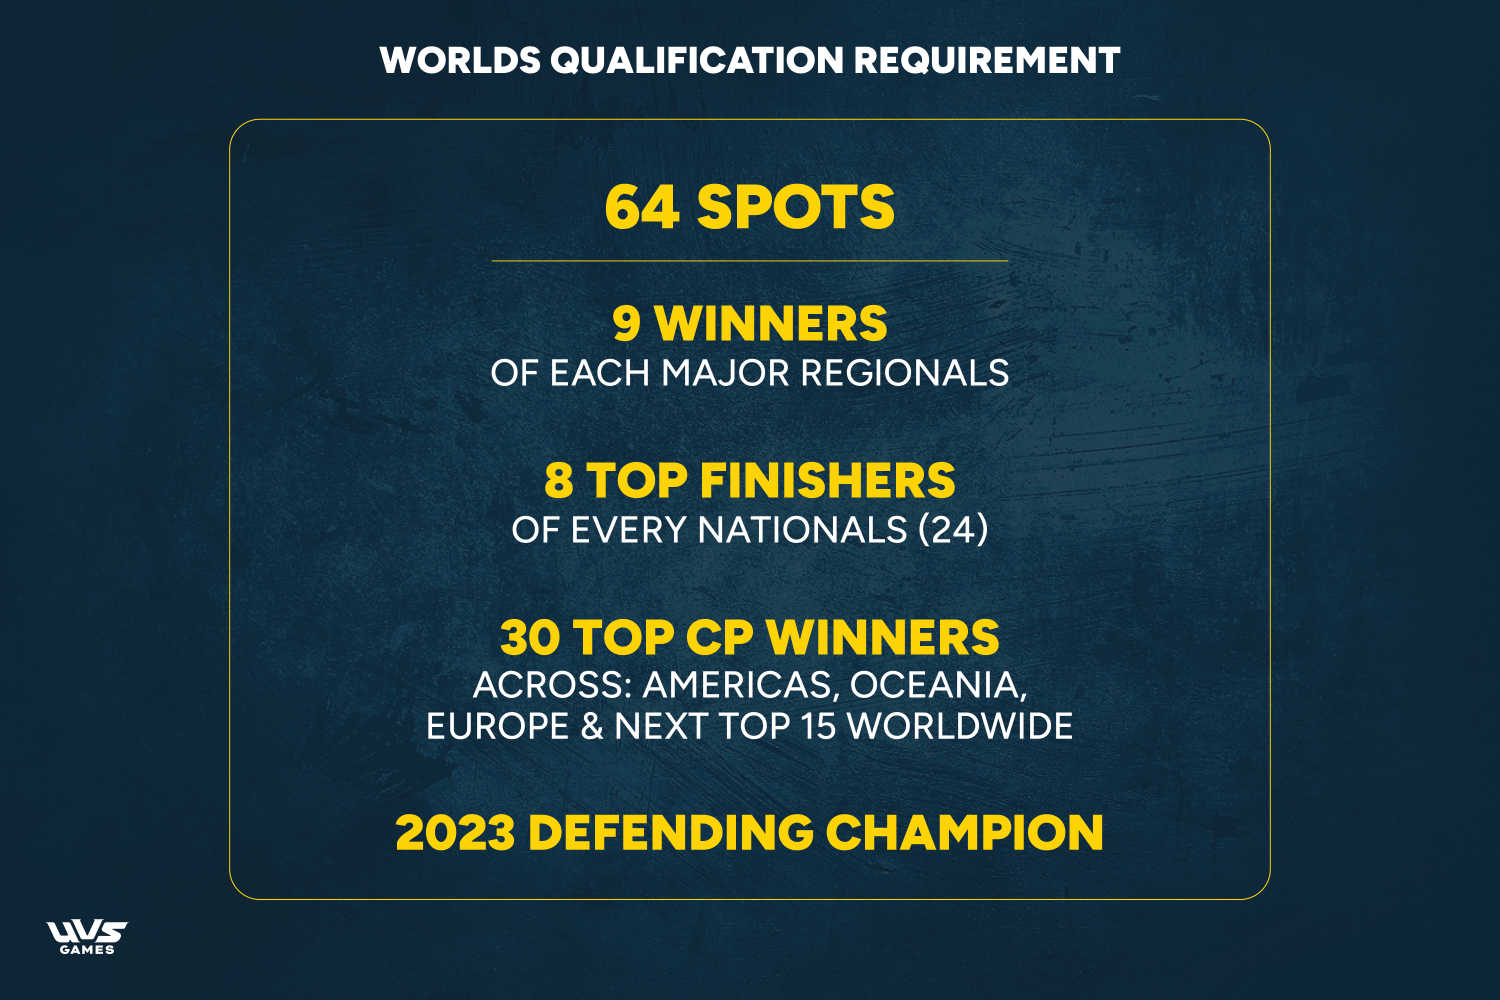 OP Infographic 04 QualificationRequirements